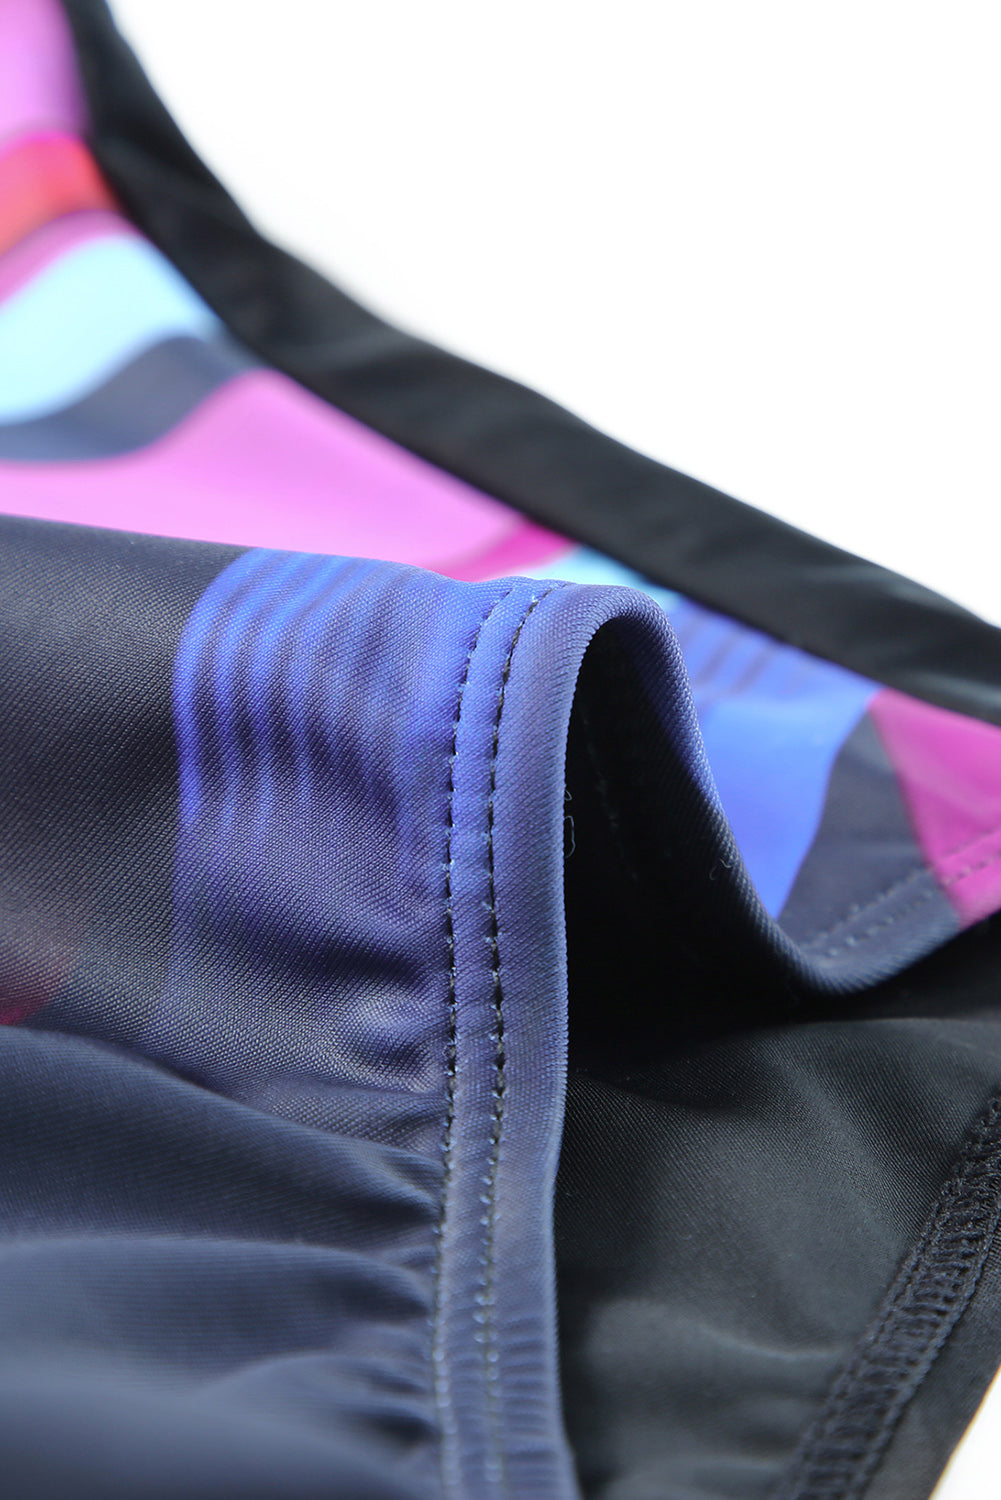 LC443354-8-S, LC443354-8-M, LC443354-8-L, LC443354-8-XL, LC443354-8-2XL, Purple Women One Piece Swimsuit Striped Pattern Print Sleeveless Bathing Suit